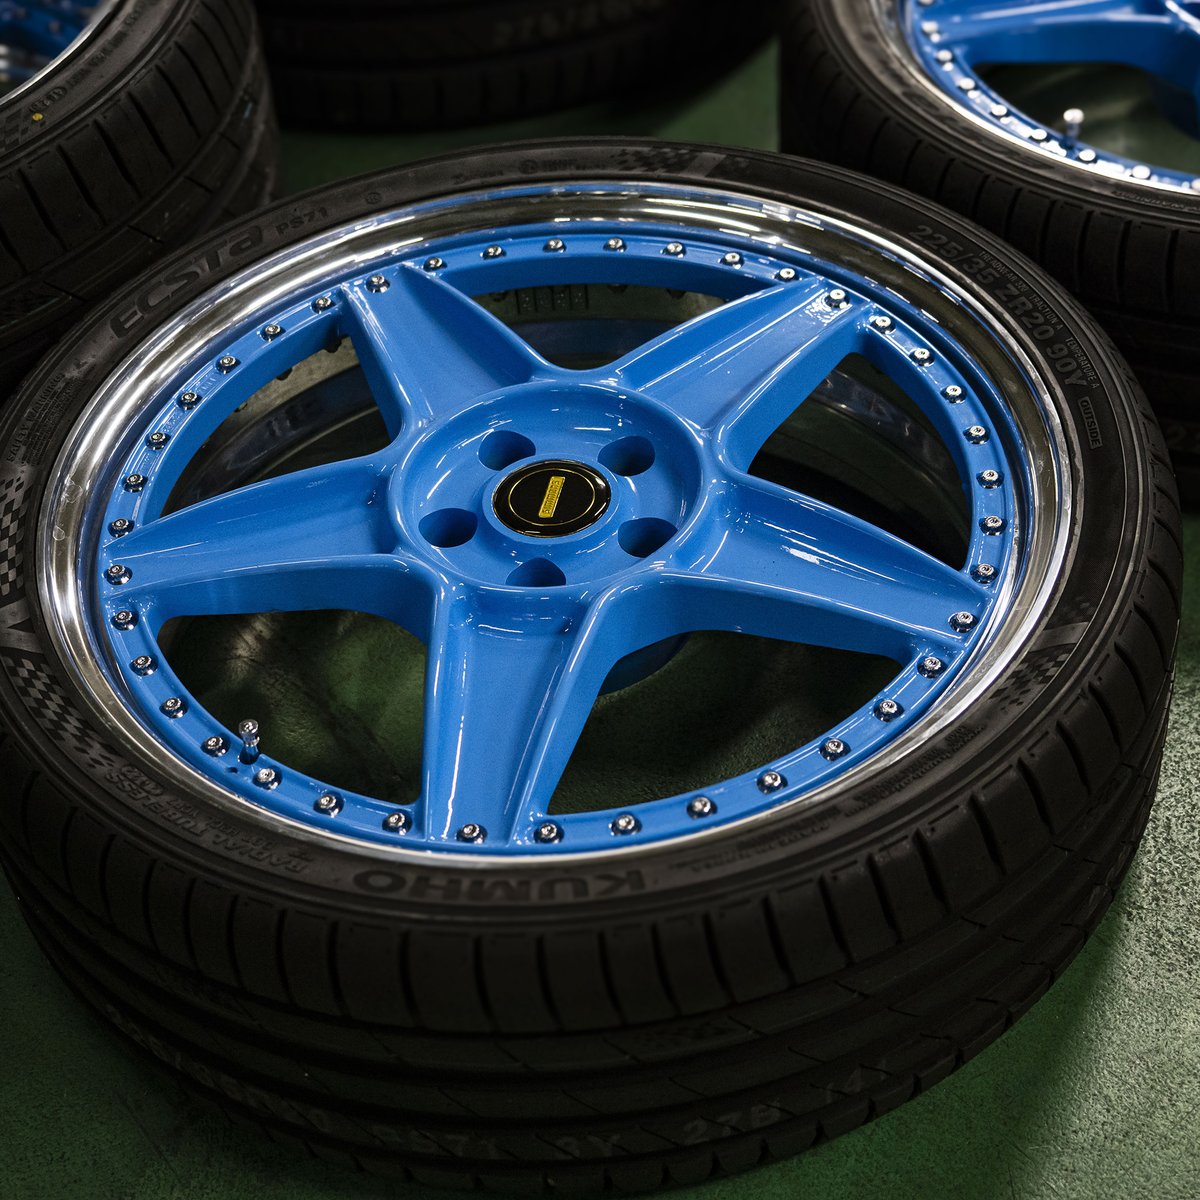 Custom Simmon B45s Wheel & Tyre Package 🥶🥶 💙

20 INCH B45

Paired with KUMHO ECSTA PS71 Tyres
225/35ZR20
275/30ZR20

#b45 #bluerims #bluewheels #3piecewheels #burnouts #prostreet #yeahbud #vehicle #carlifestyle #instacar #tires #cargramm #slammed #tireshop #temptyres